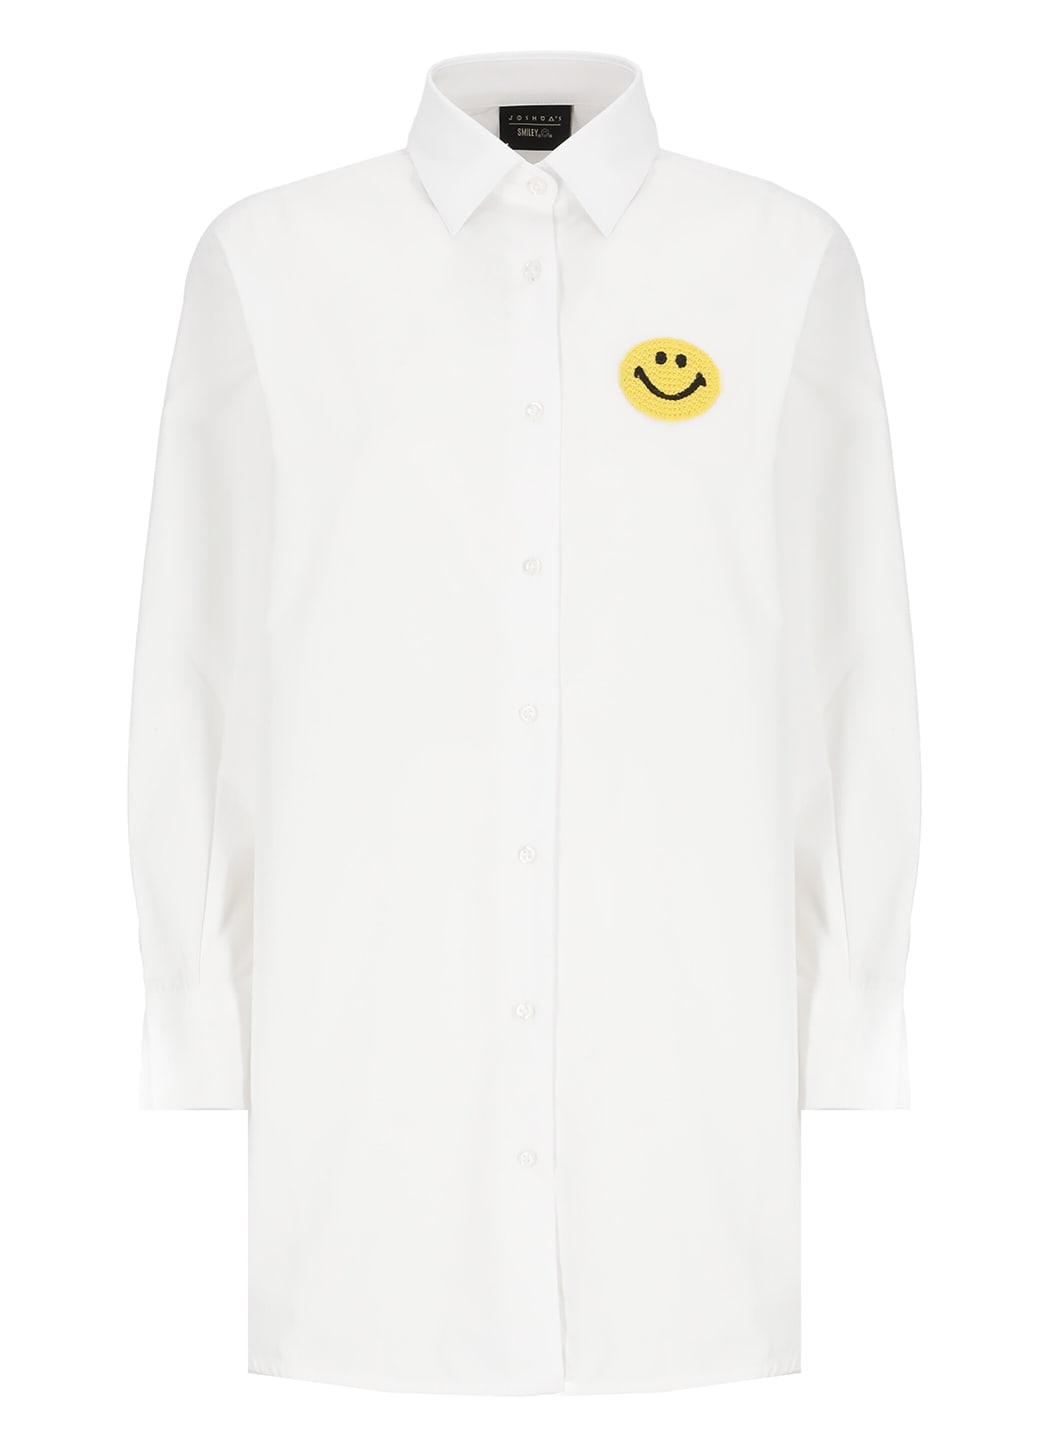 Joshua Sanders Smiley Shirt